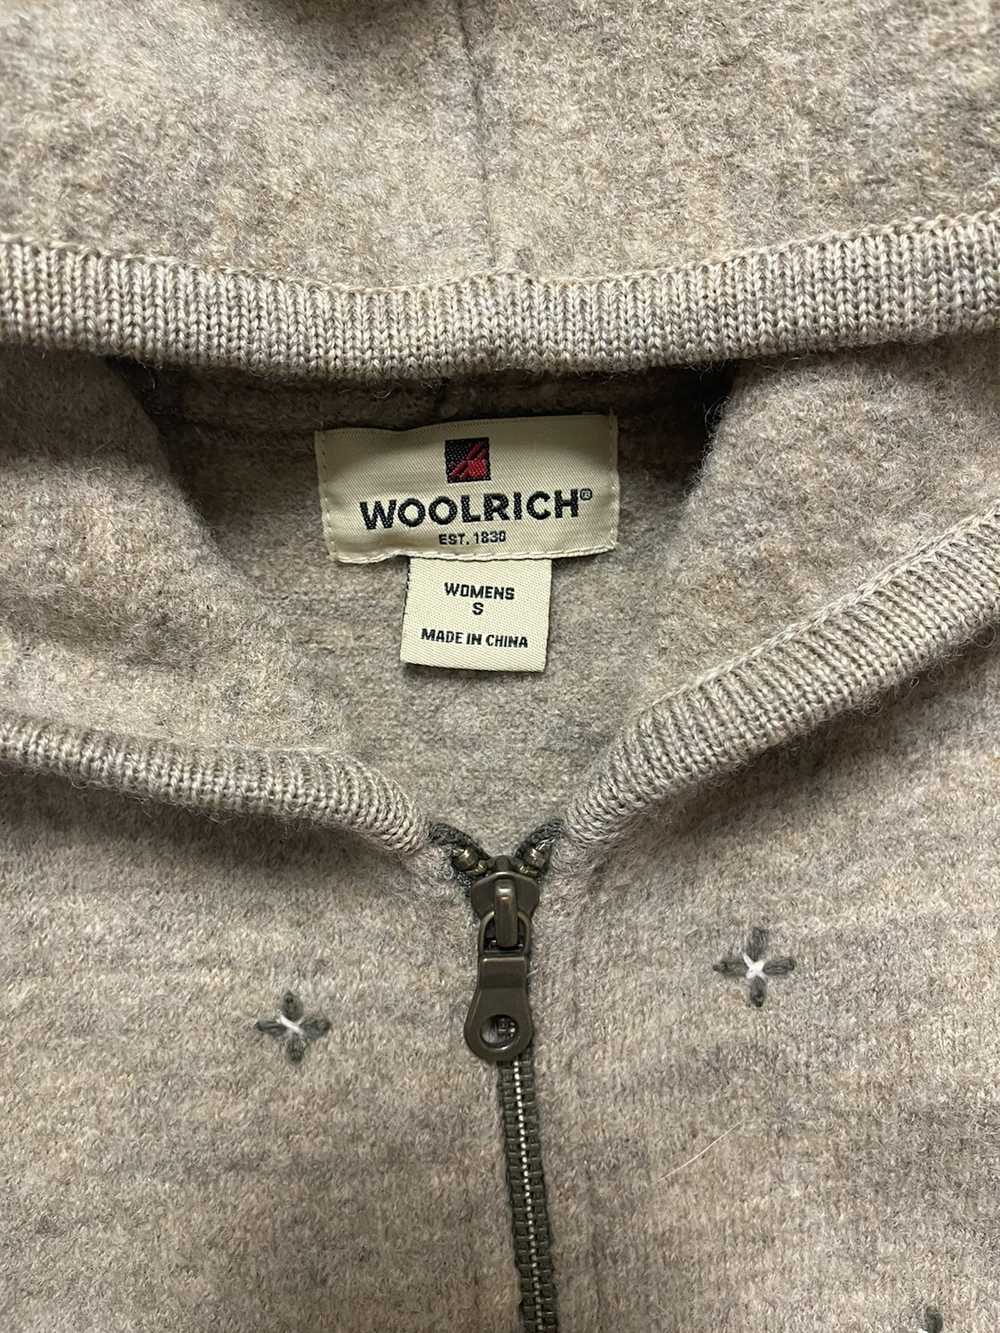 Vintage × Woolrich Woolen Mills Zip Up Jacket wit… - image 3